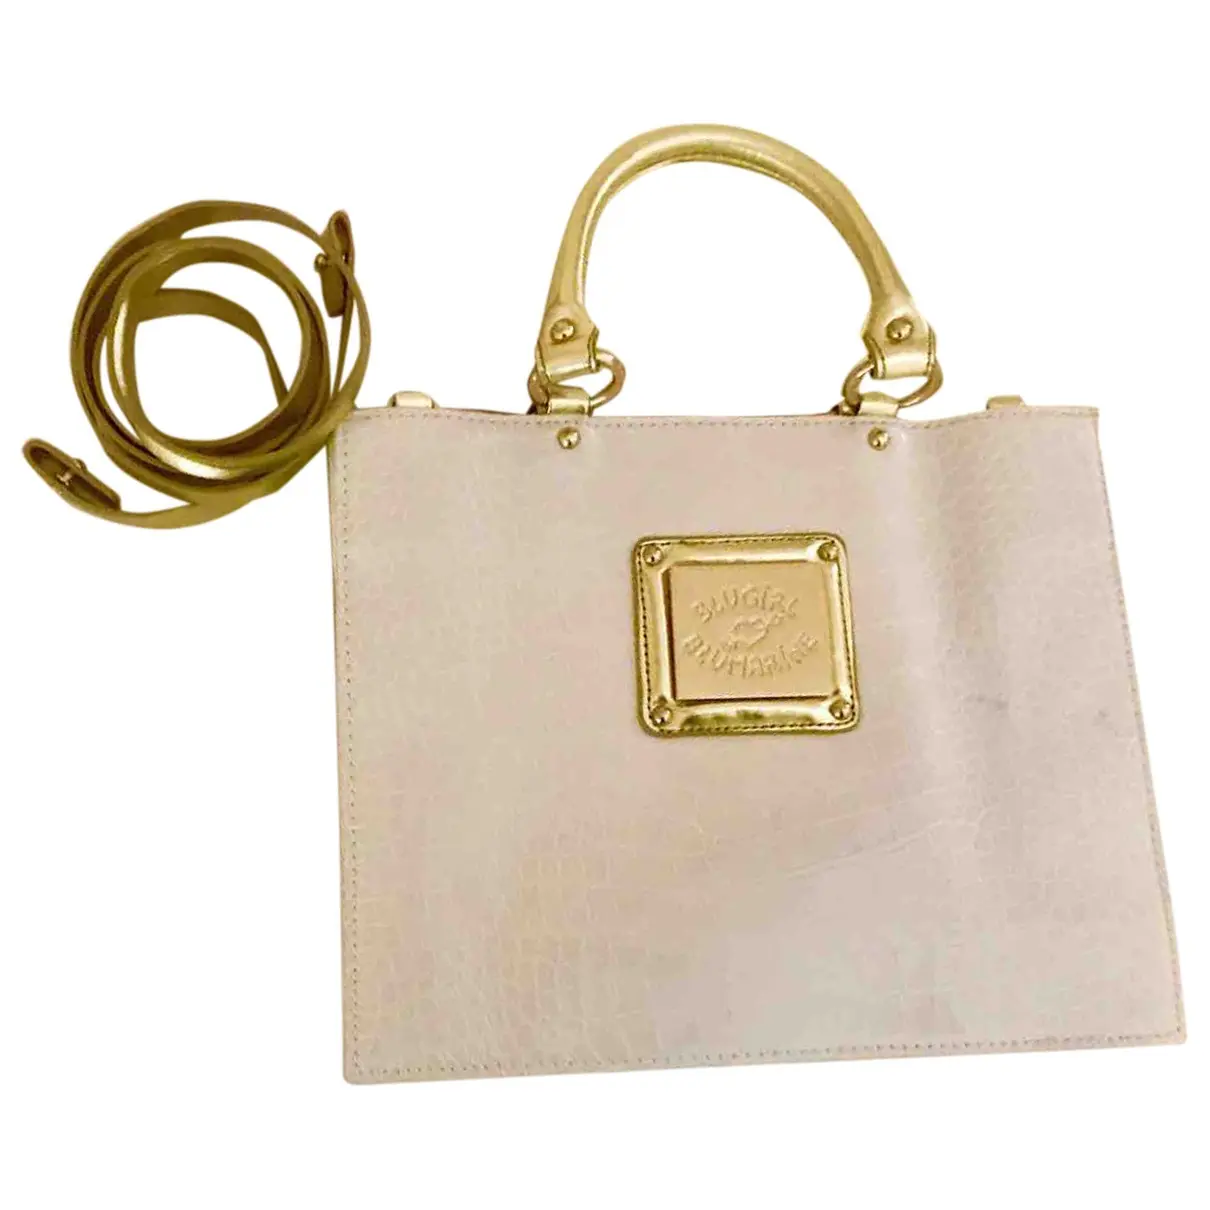 Patent leather handbag Blumarine